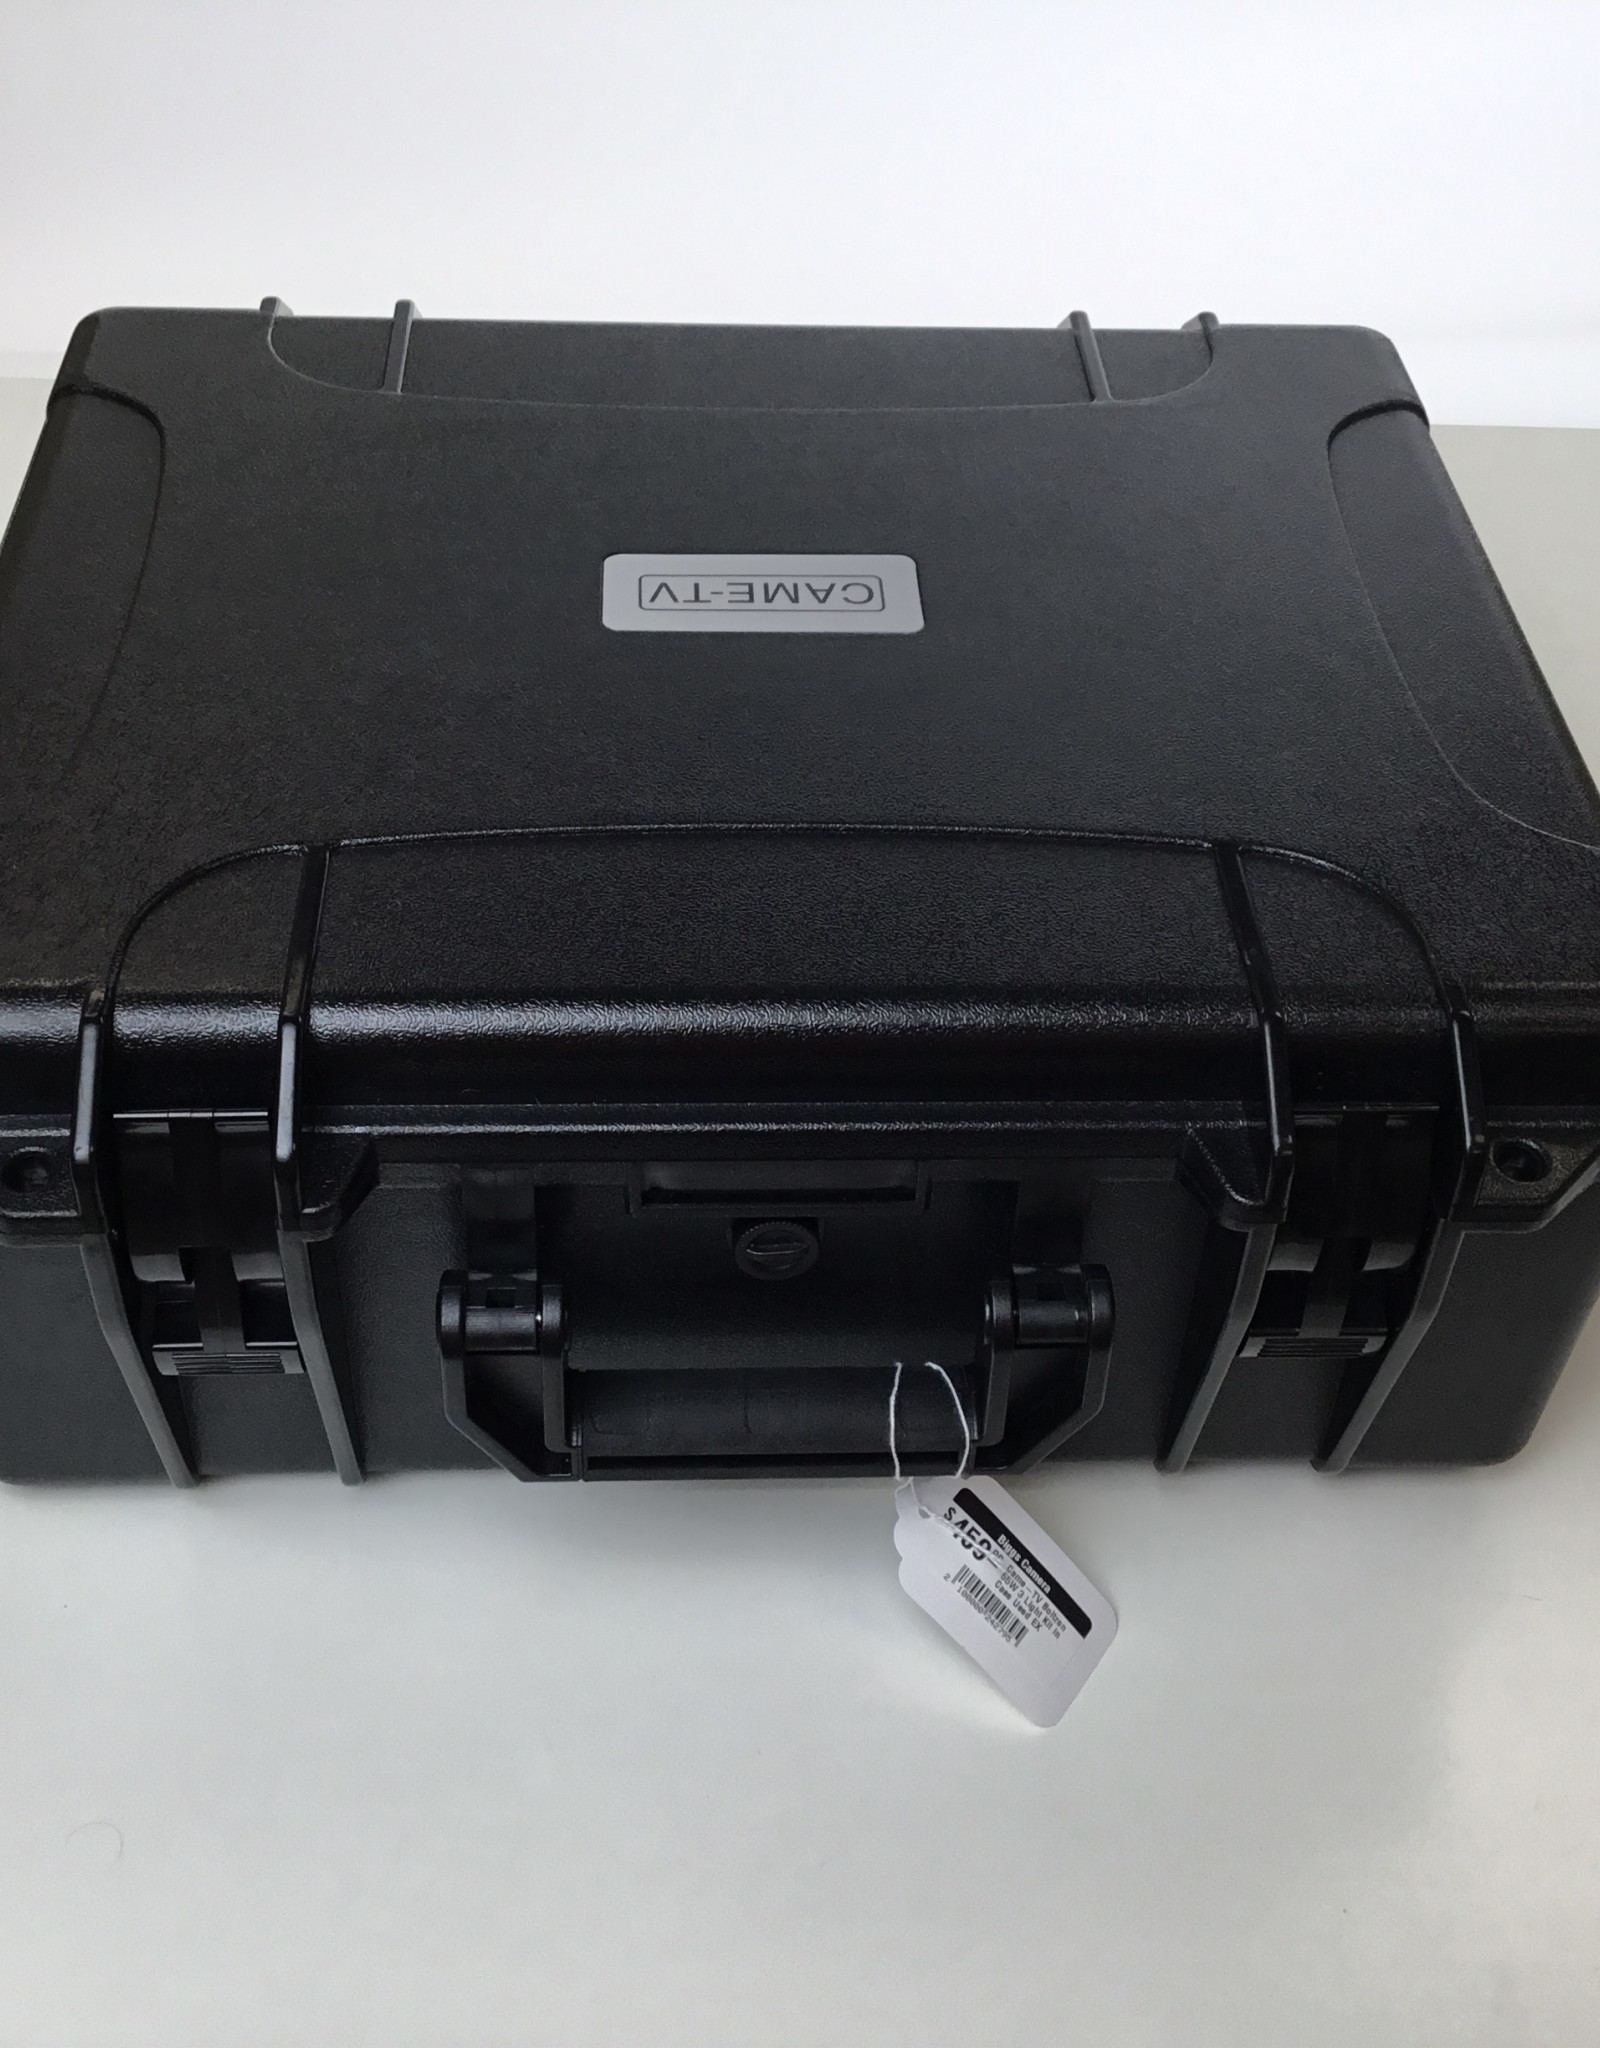 Came-TV Boltzen 55W 3 Light Kit in Case Used EX